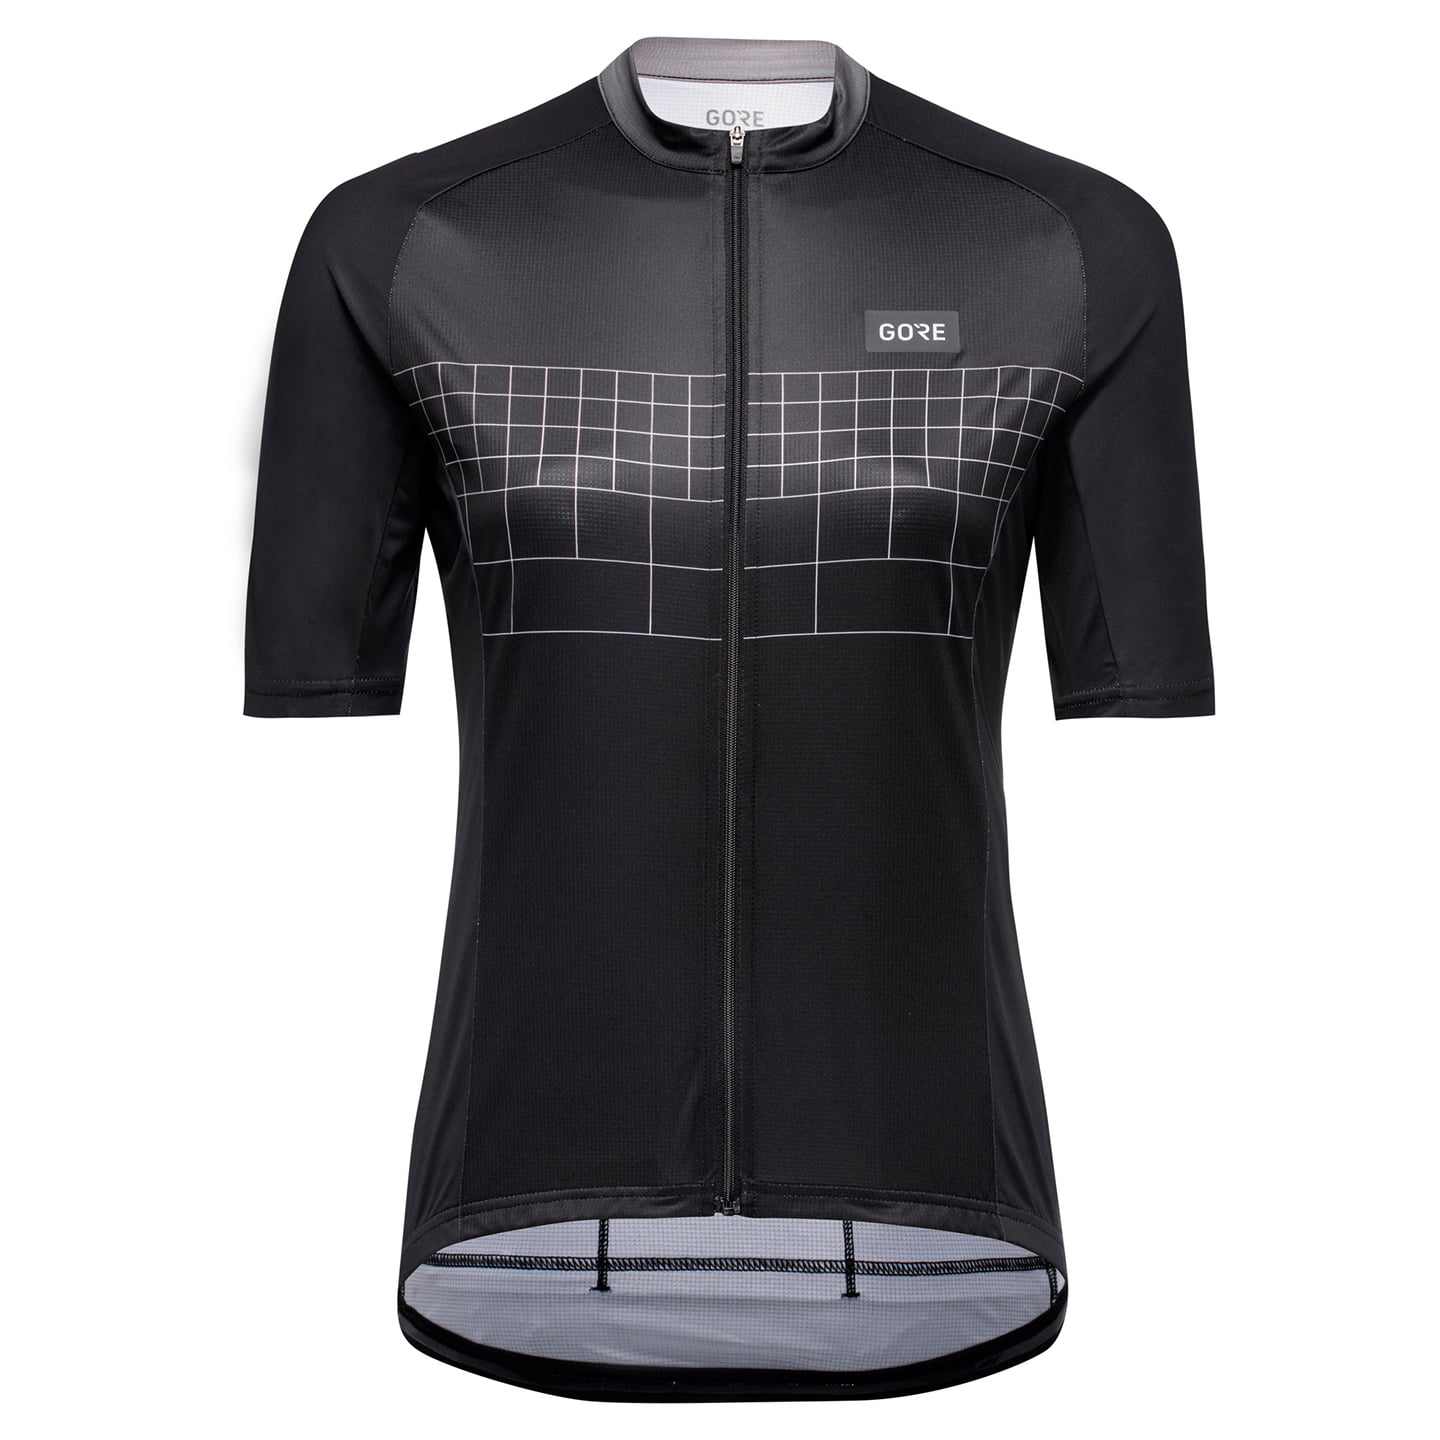 GORE WEAR Grid Fade 2.0 Women’s Jersey Women’s Short Sleeve Jersey, size 40, Cycle shirt, Bike clothing